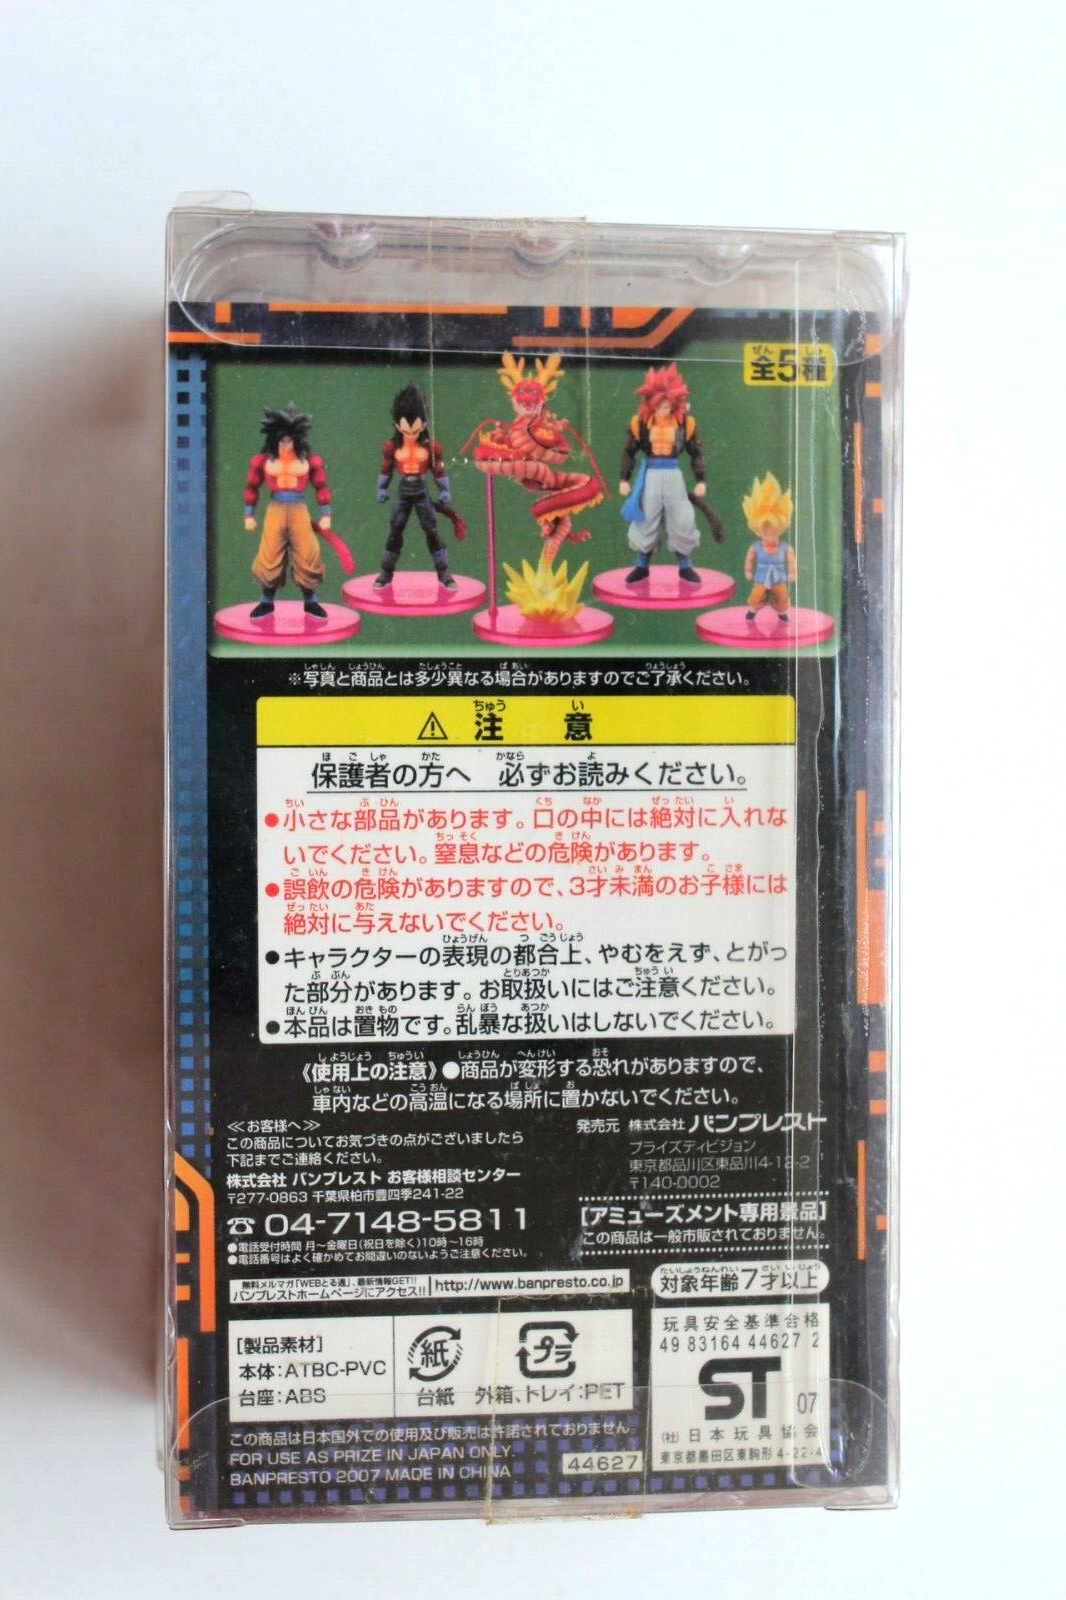 Super Saiyan 4 (SSJ4) Gogeta Dragon Ball GT - Figures / Figures / Figures  and Merch - Otapedia